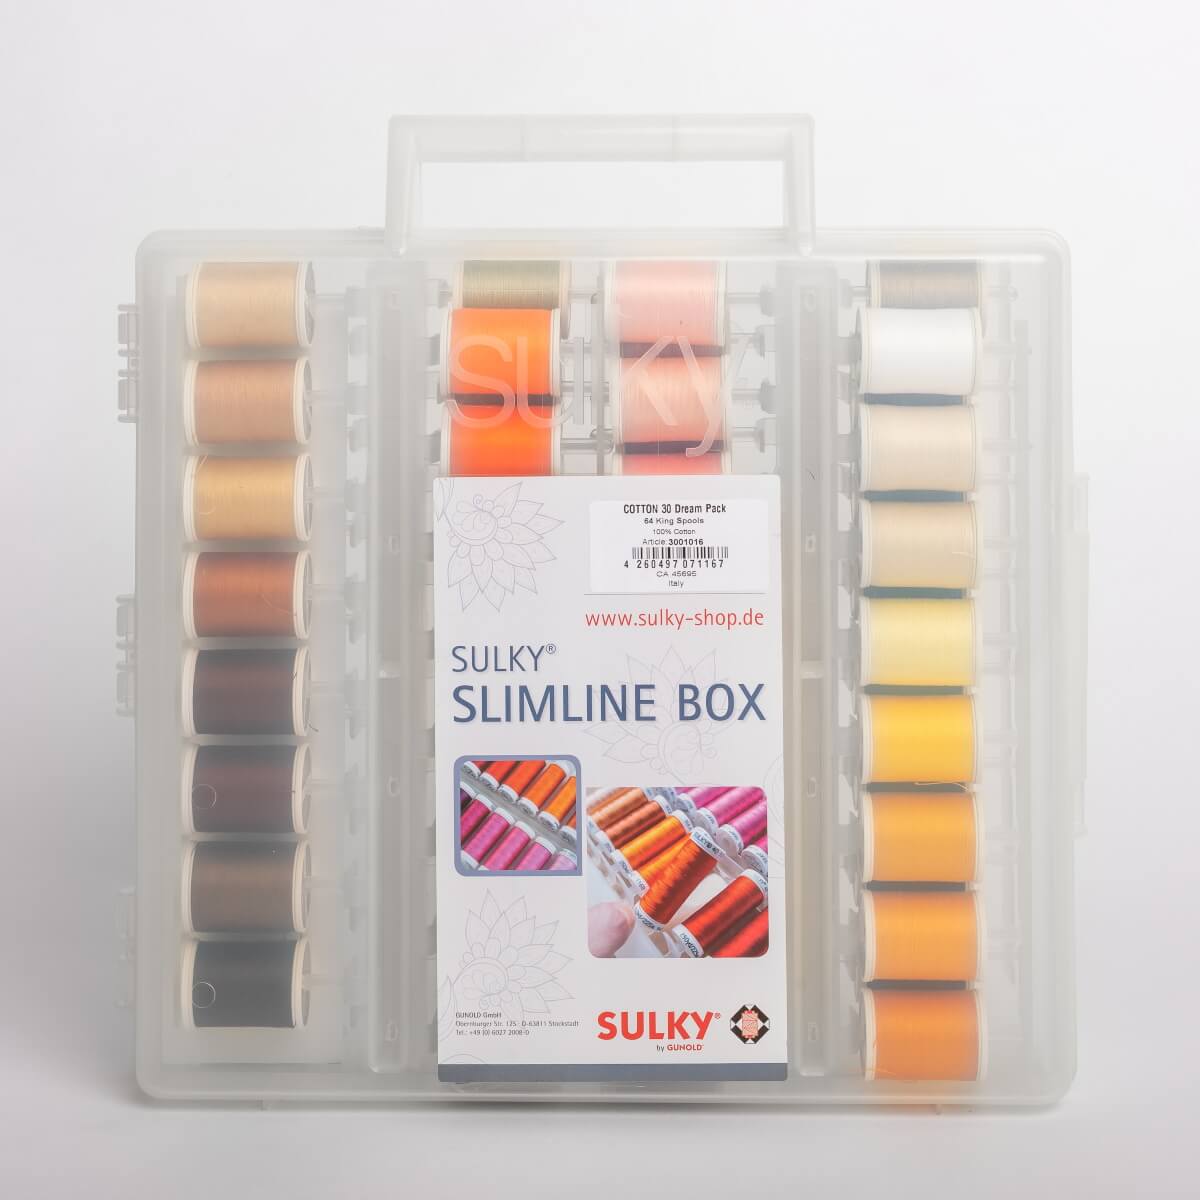 SULKY UNIVERSAL SLIMLINE BOX - Cotton 30 Dream Pack